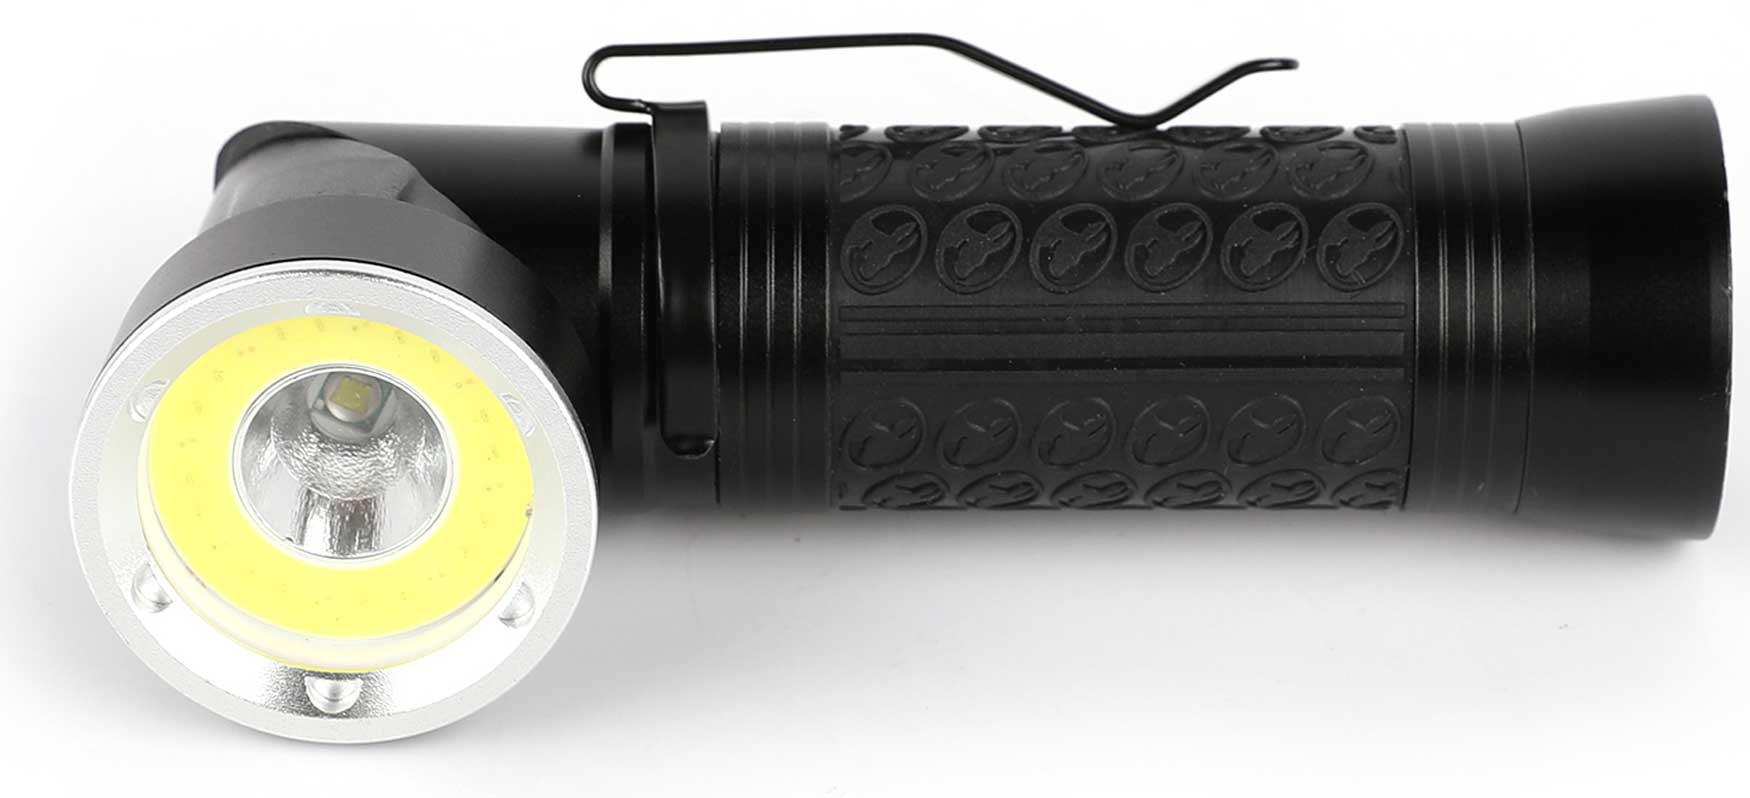 Manual LED flashlight